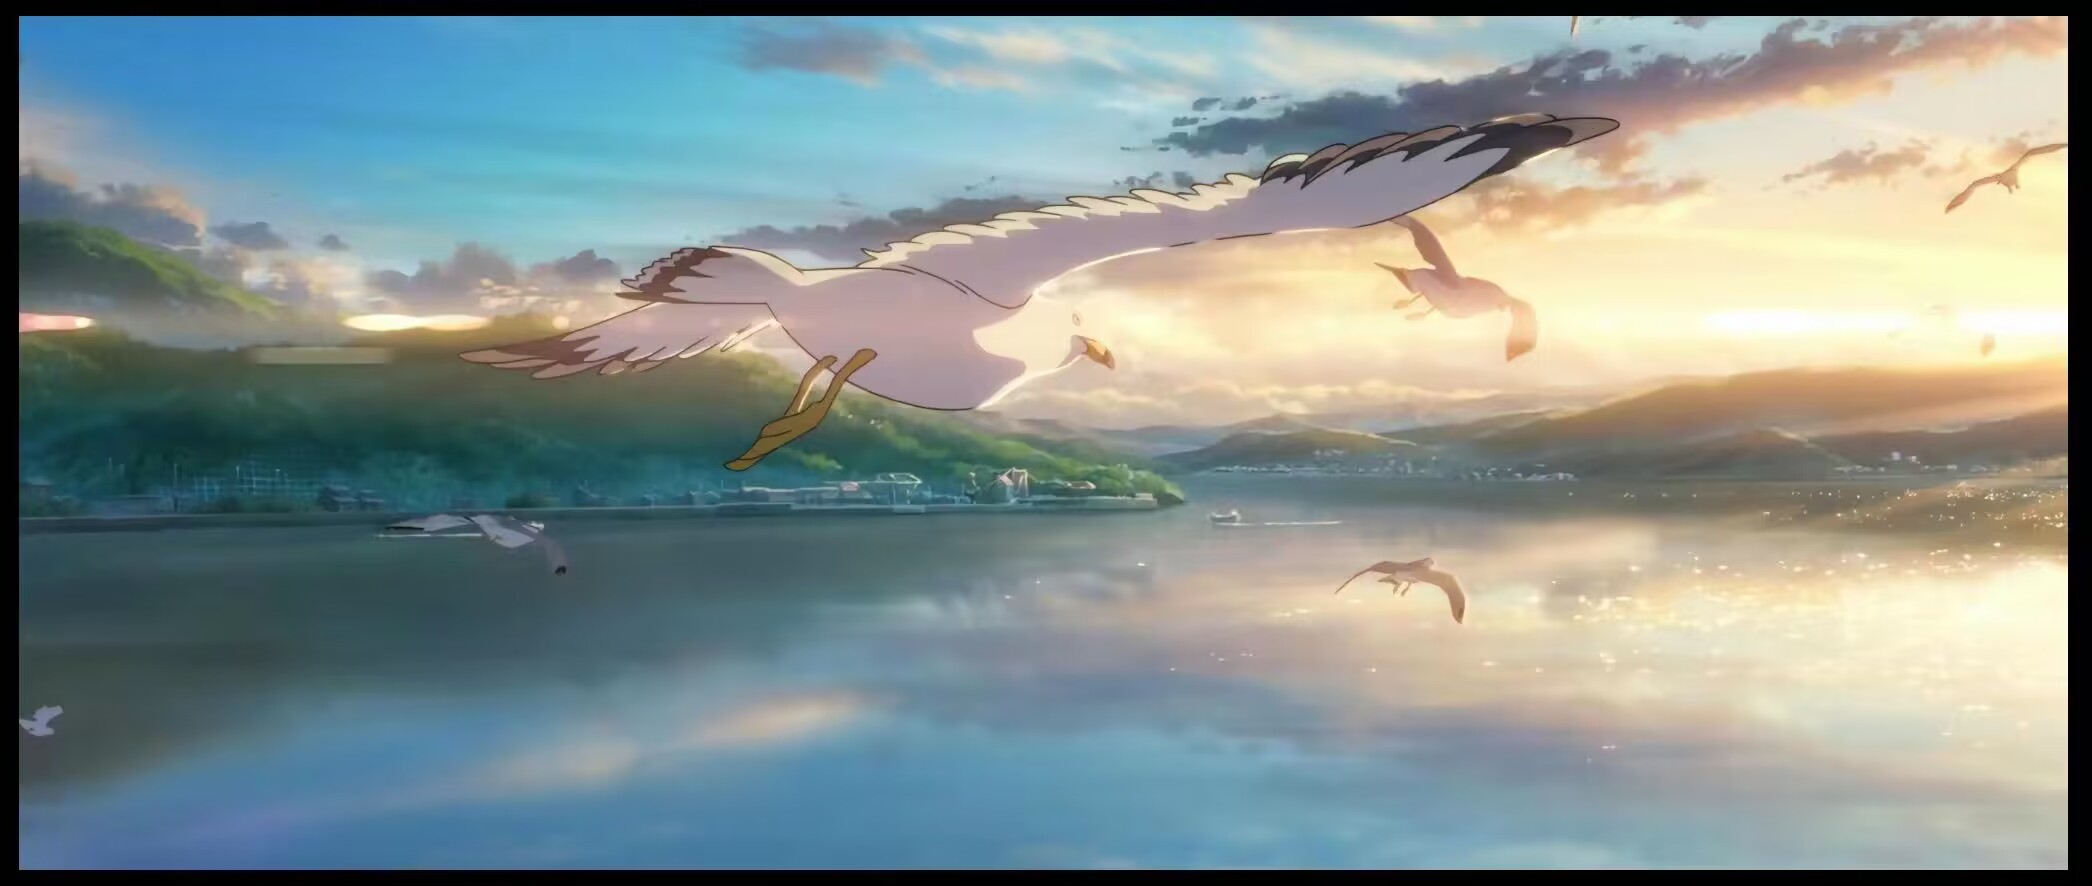 Anime 2092x886 Suzume bird of prey anime Anime screenshot water sea clouds sunset sunset glow mountains sky animals birds